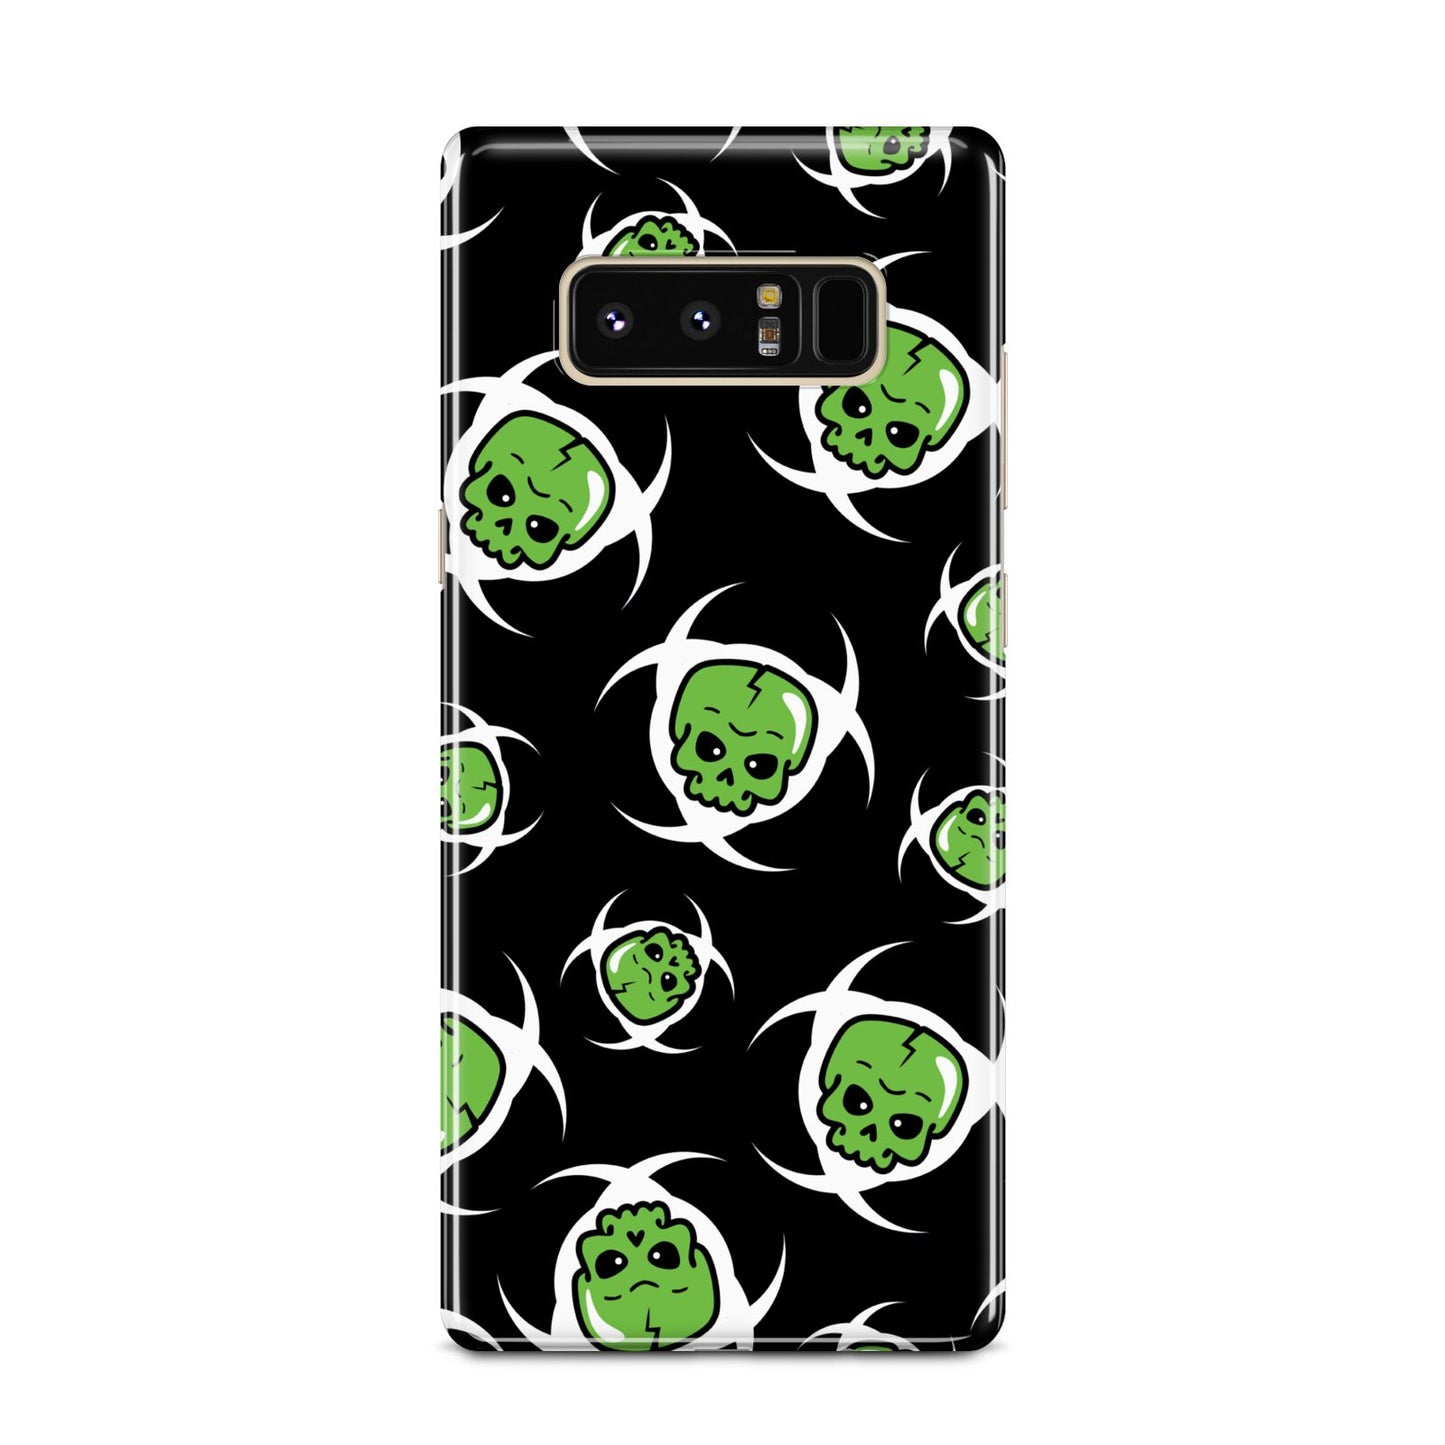 Toxic Skulls Samsung Galaxy Note 8 Case